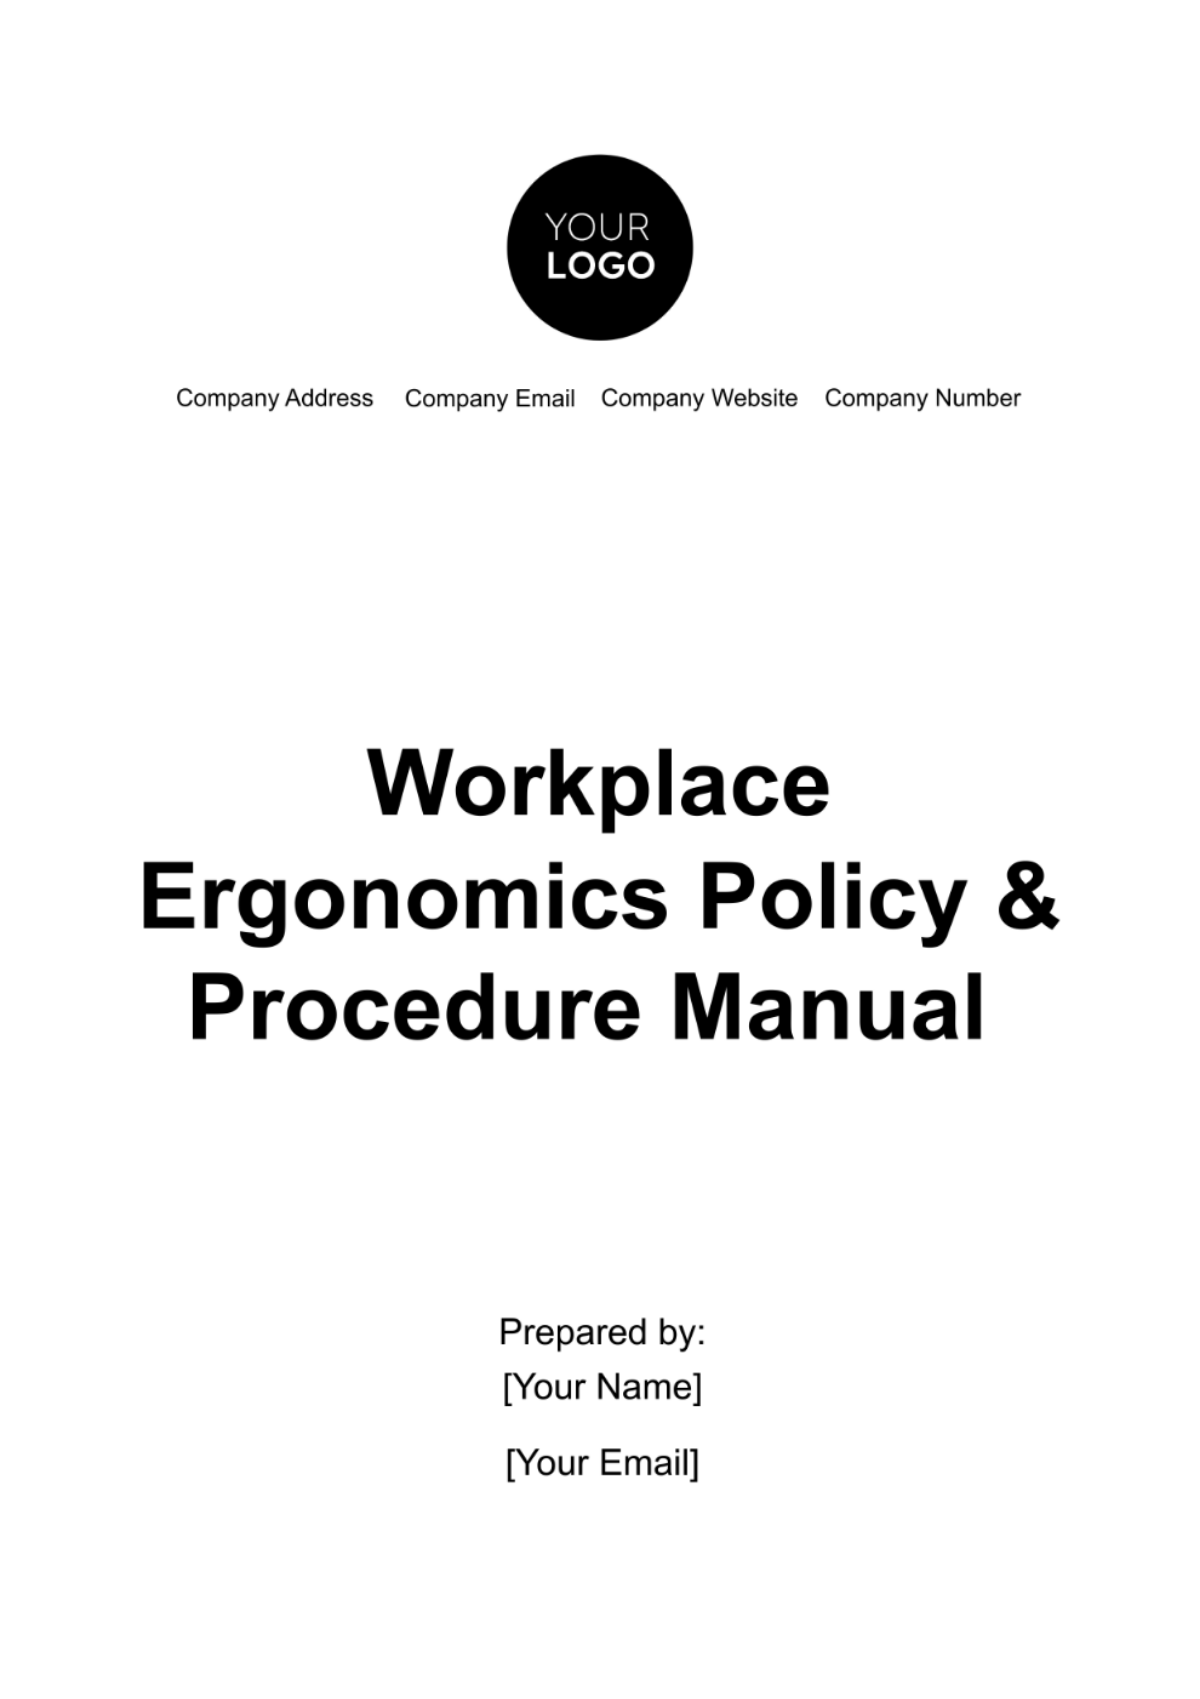 Free Workplace Ergonomics Policy & Procedure Manual Template